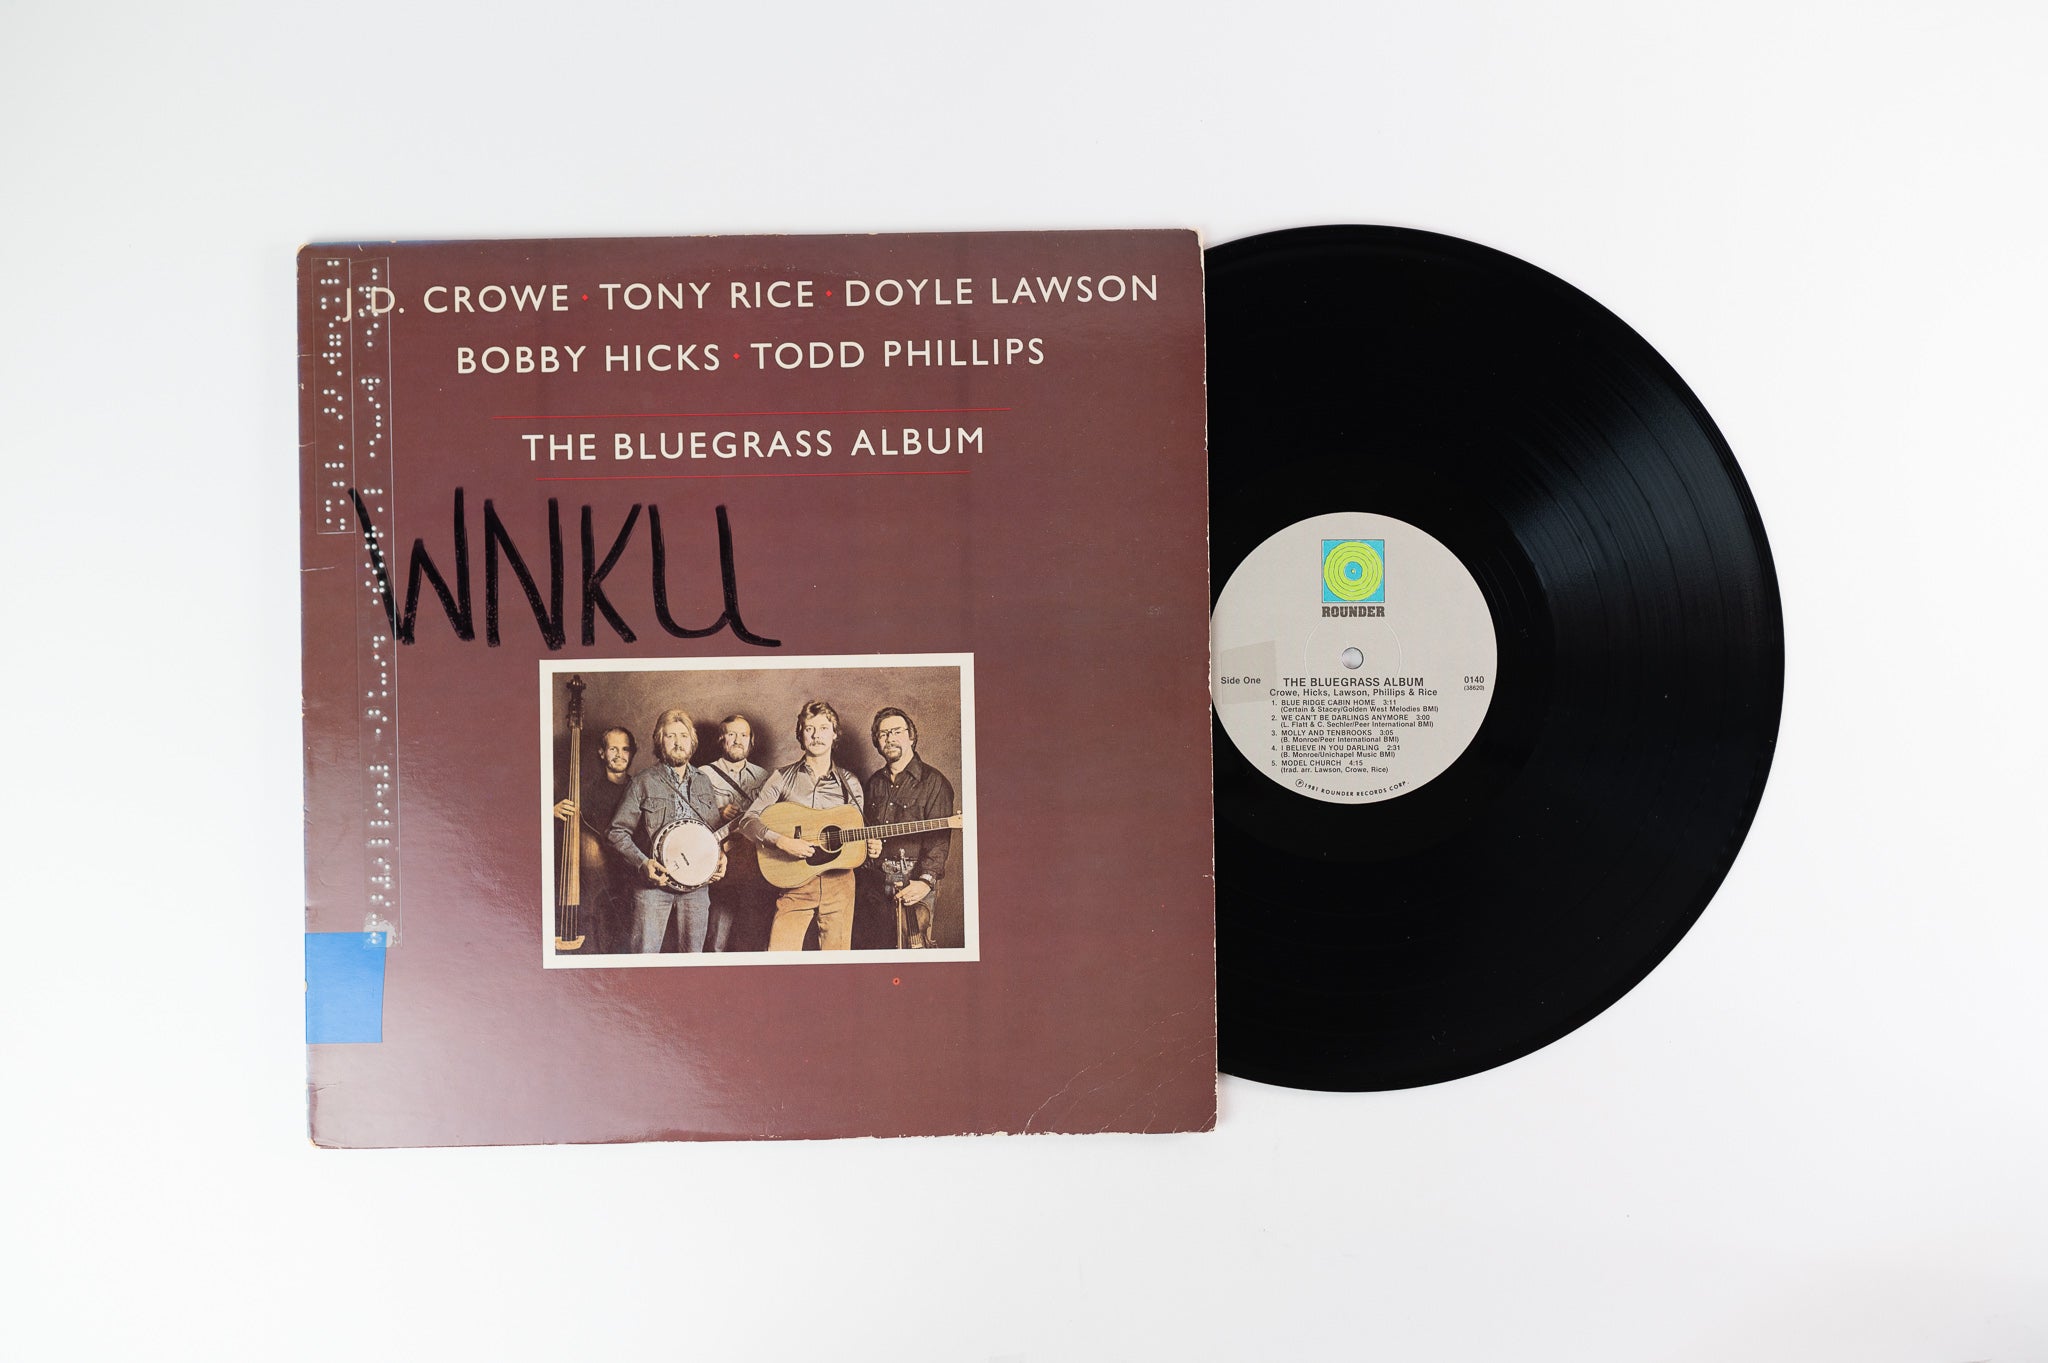 J.D. Crowe Tony Rice & Various - The Bluegrass Album on Rounder